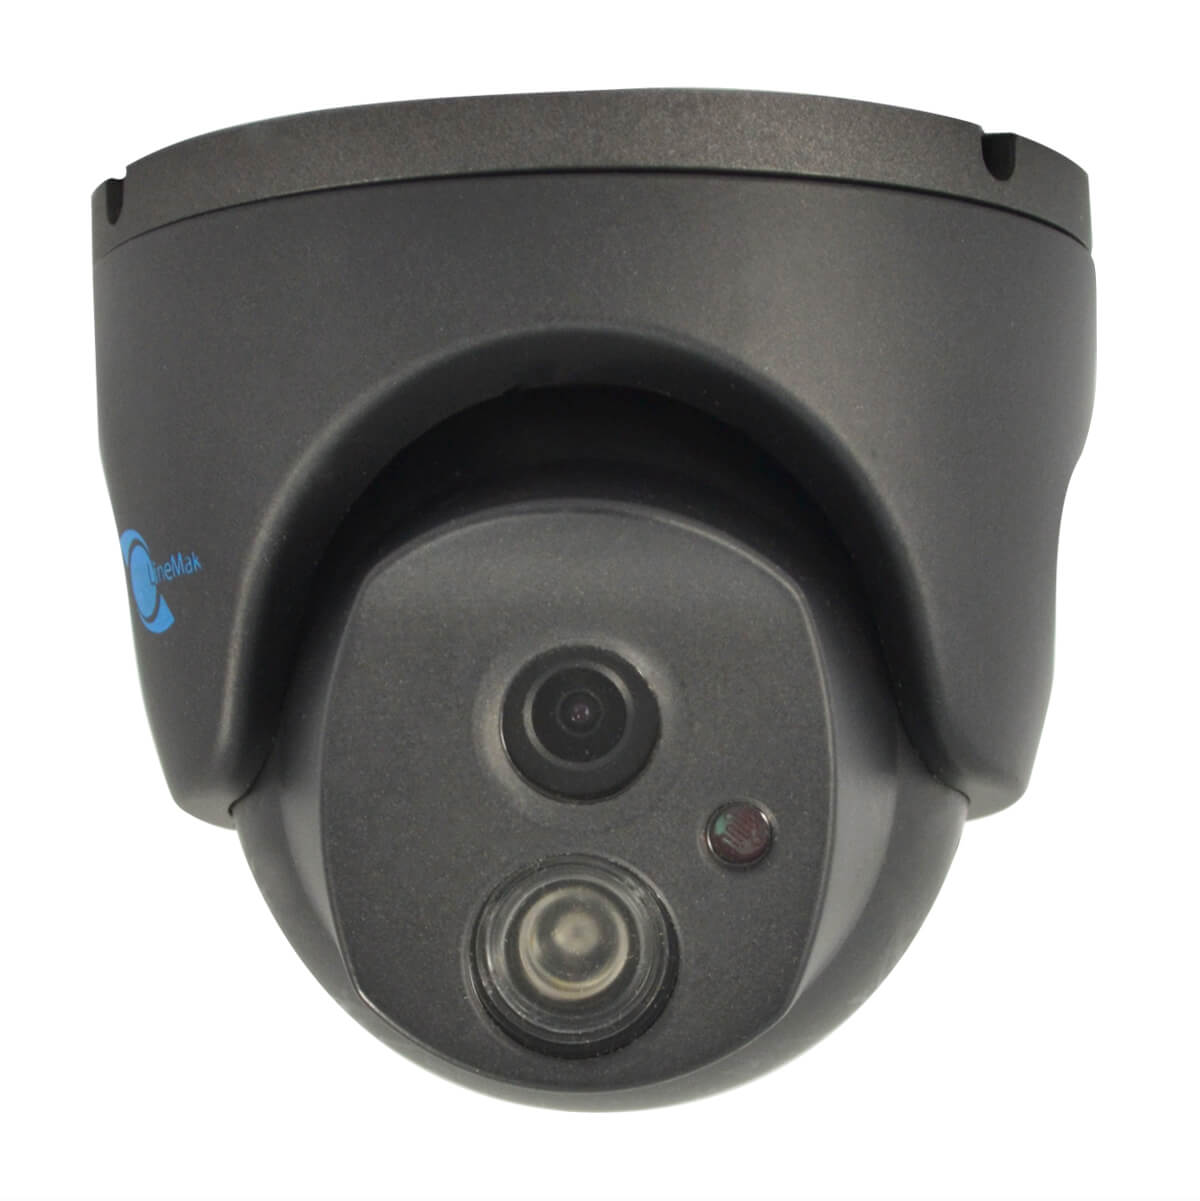 Camara domo, Sensor Sony CCD 1/3, 700TVL, 1 LED Array, 25m IR, IP66